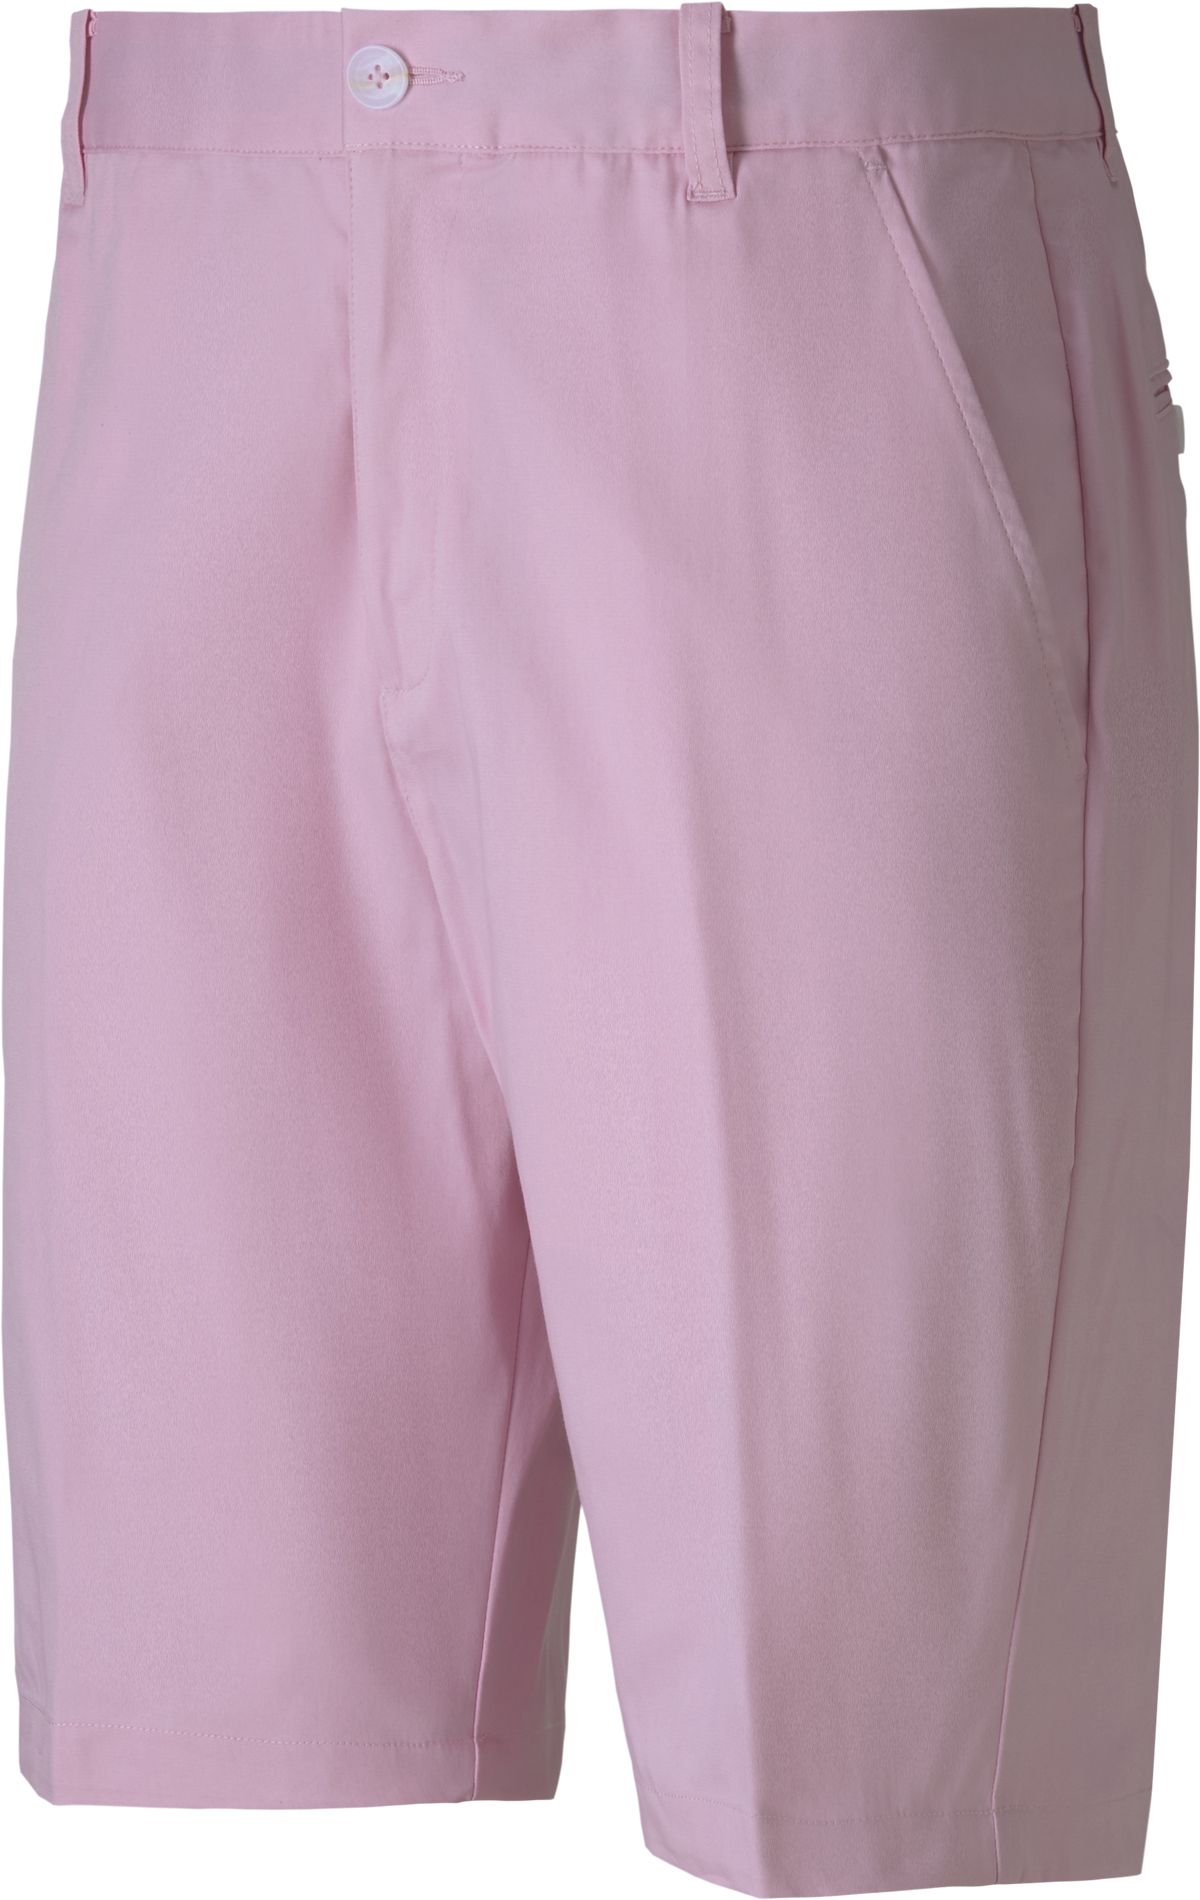 puma pink golf shorts